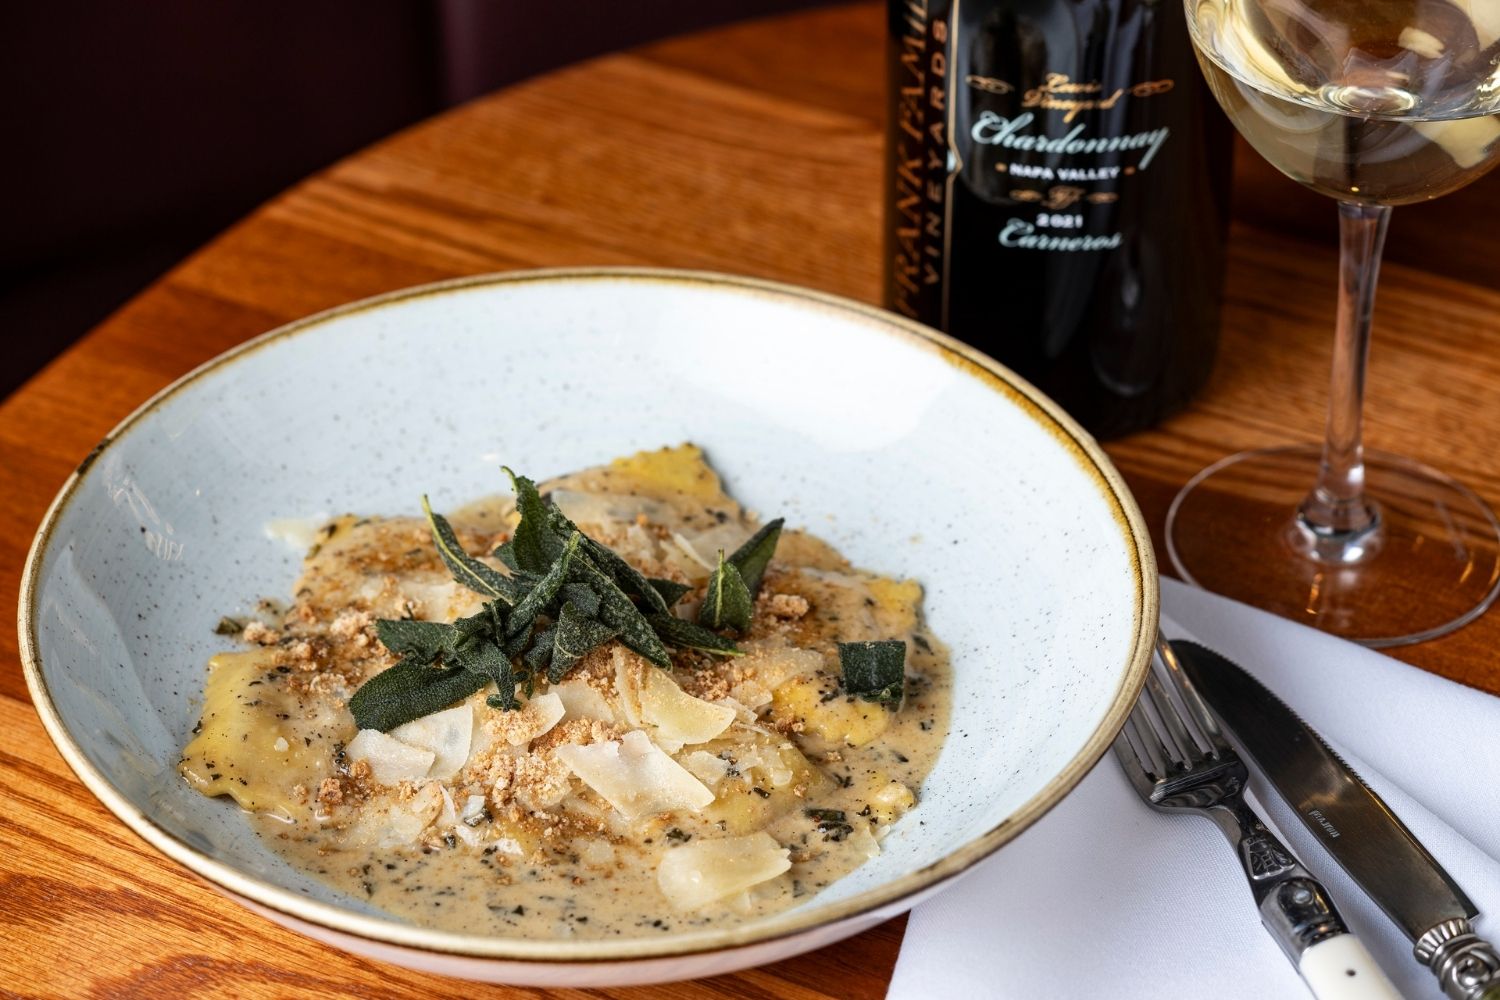 A bowl of creamy butternut squash ravioli topped with crispy sage alongside a glass of Lewis Vineyard Chardonnay.